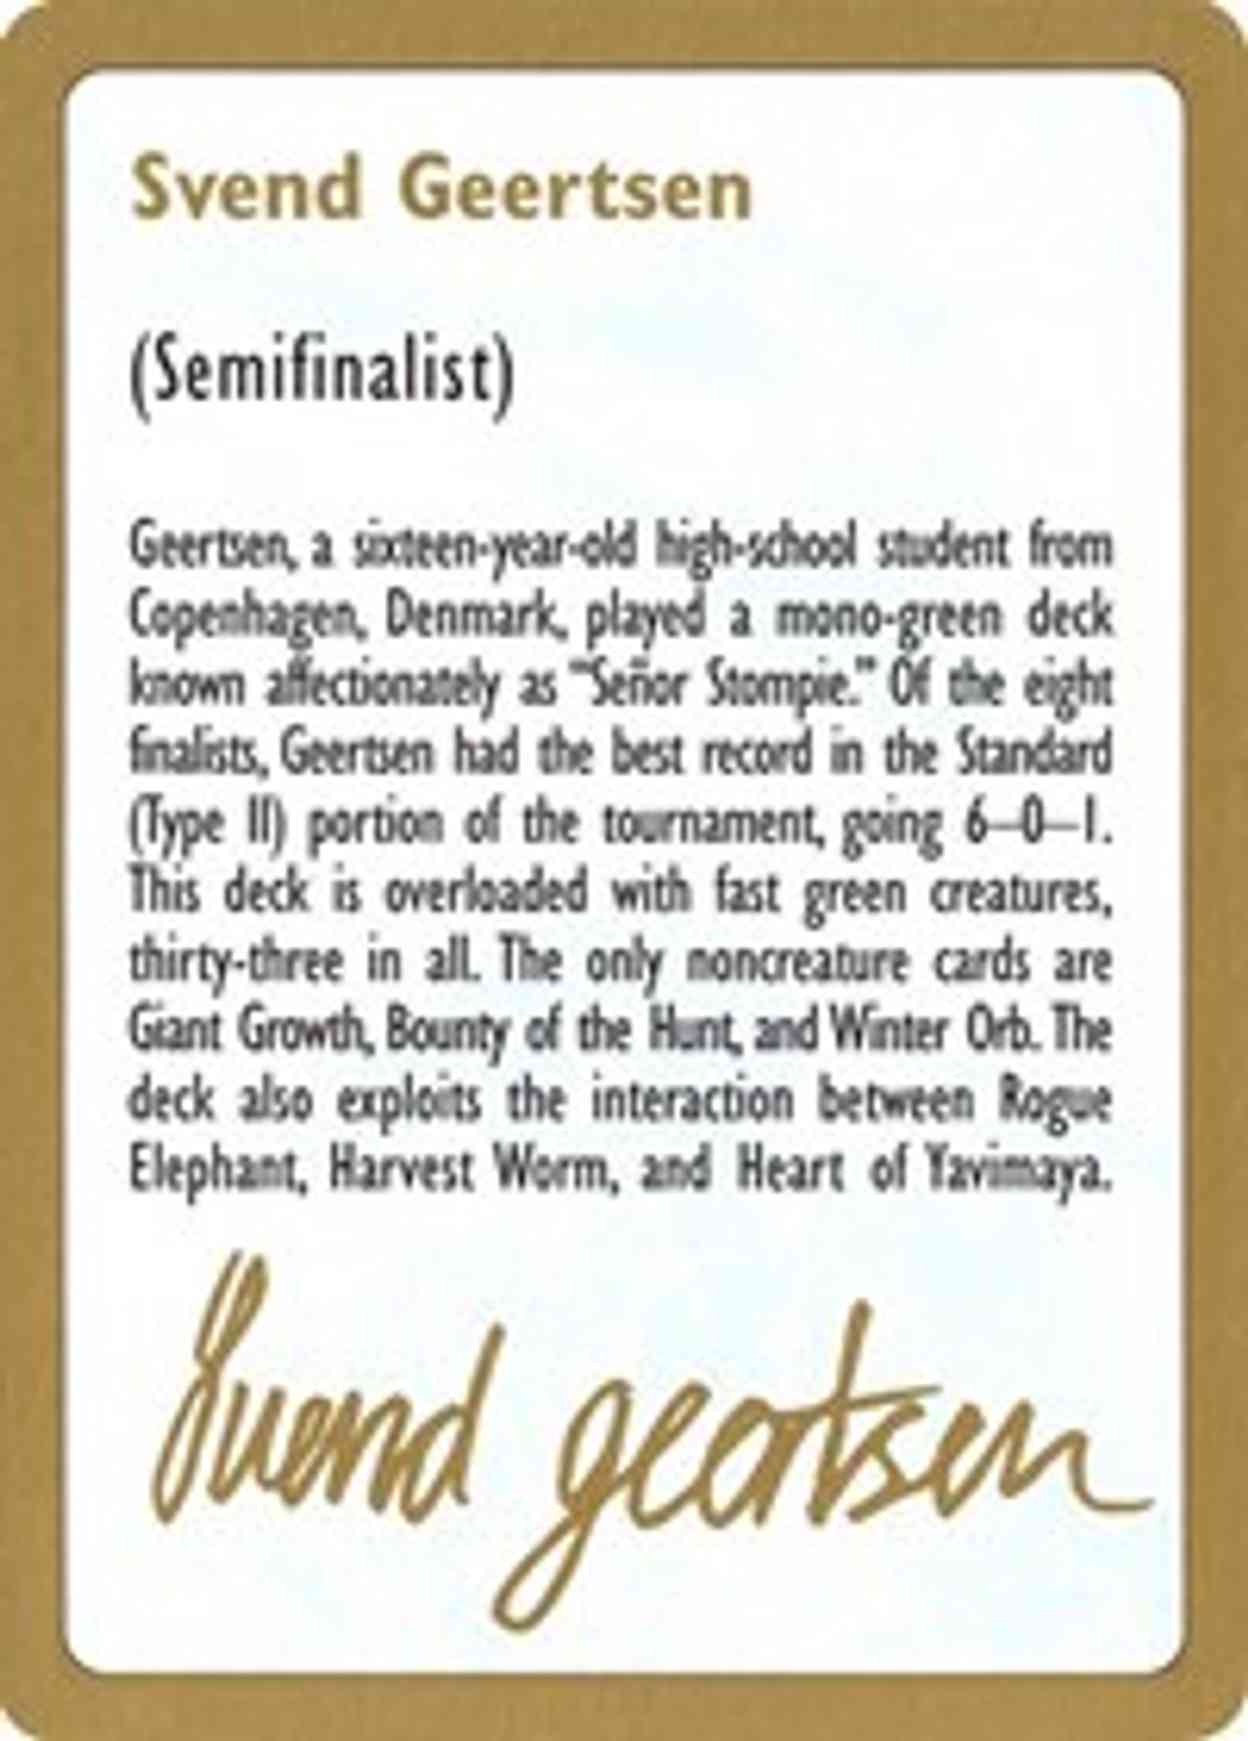 1997 Svend Geertsen Biography Card magic card front